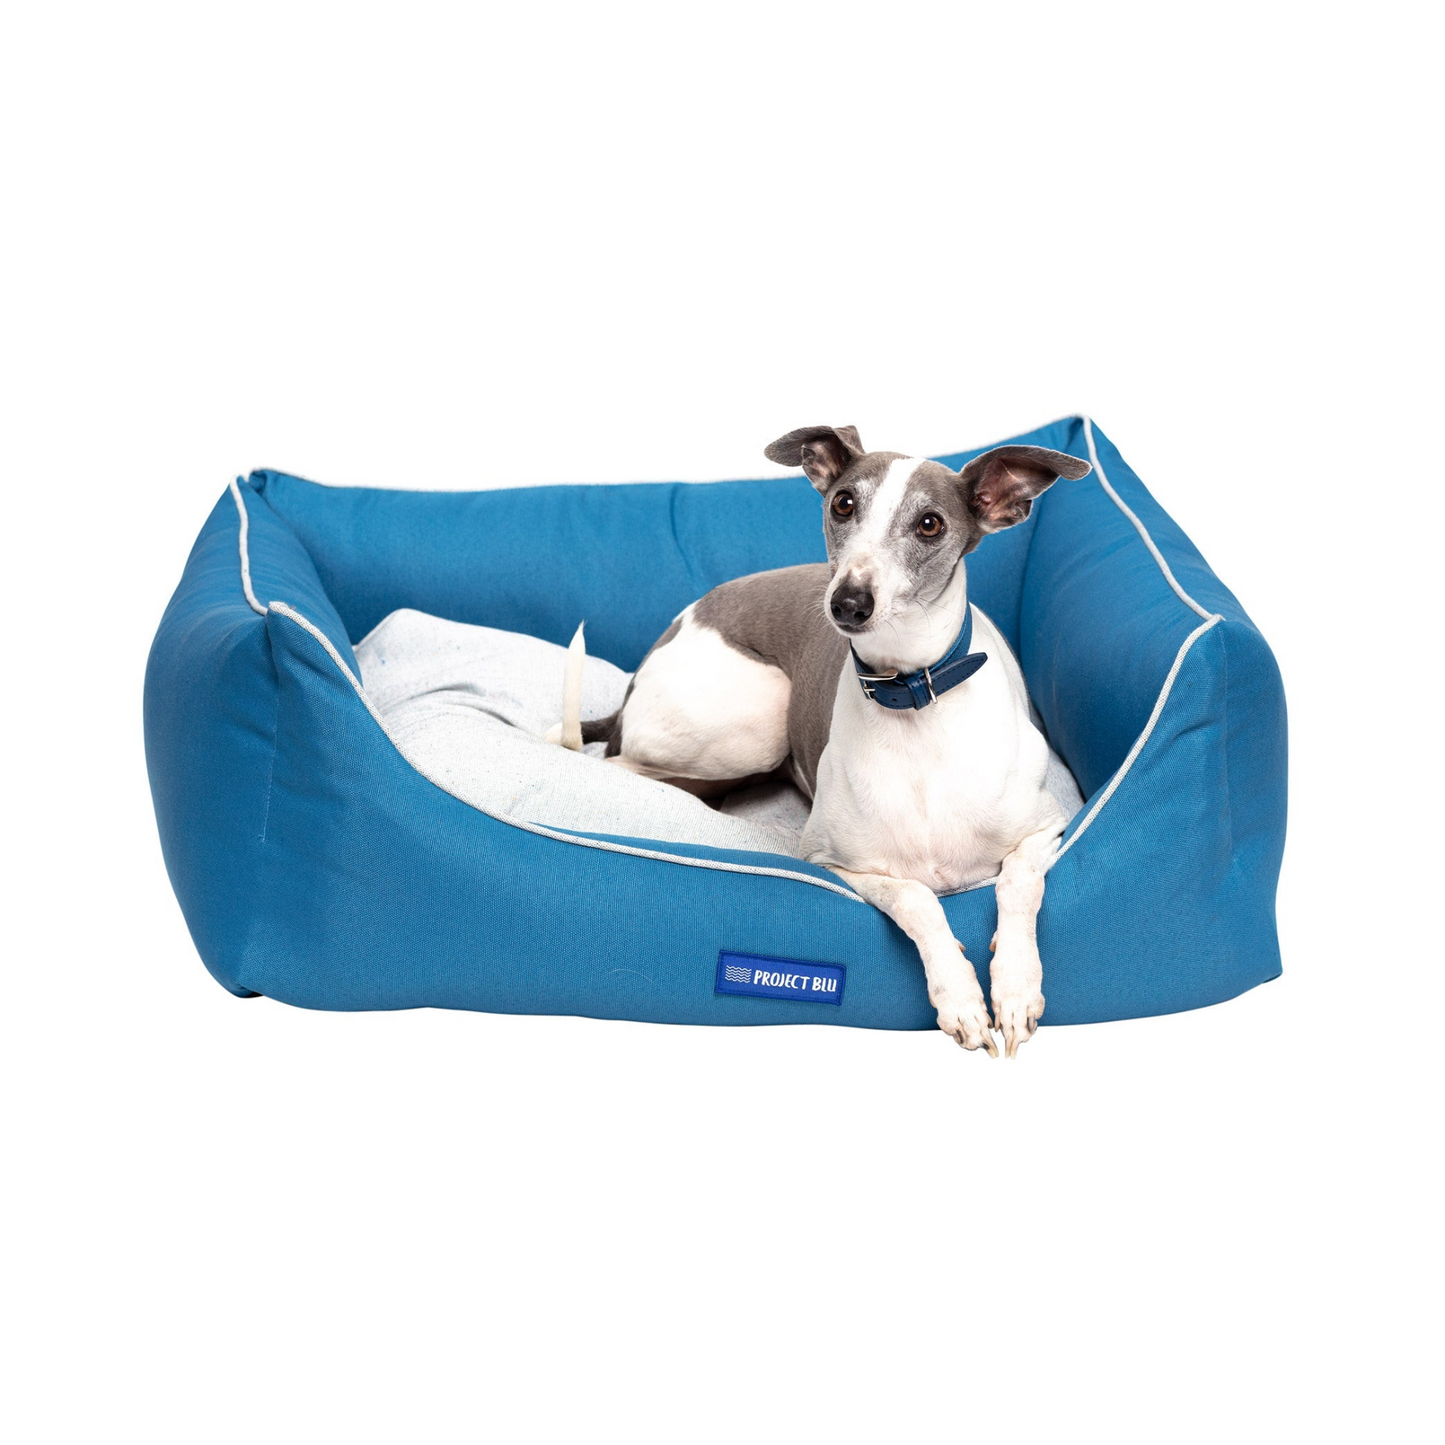 Marlin Eco-Fabric Bolster Dog Bed - Stylish and Eco-friendly